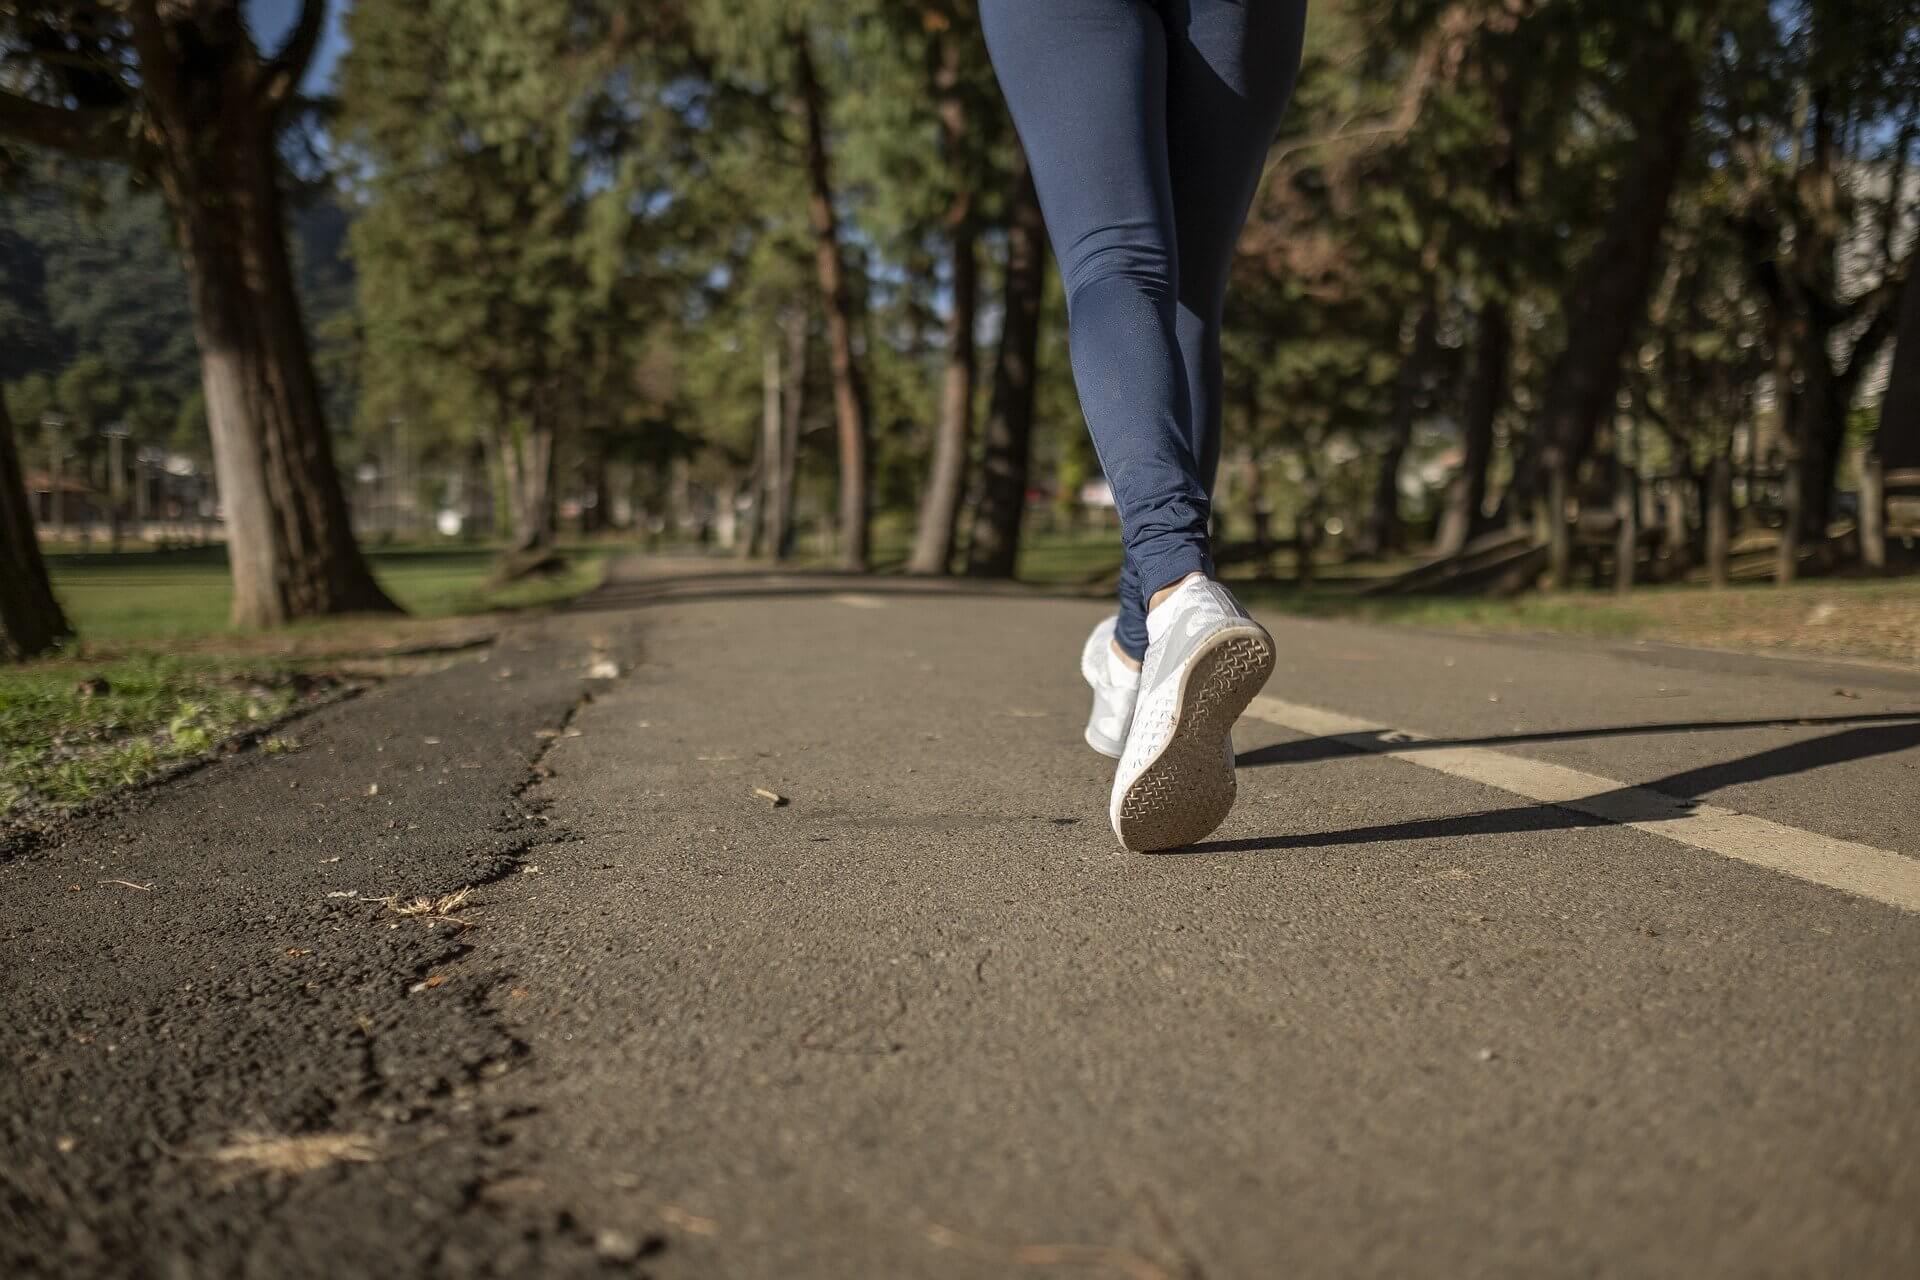 Asics’ new study highlights the uptake in running   